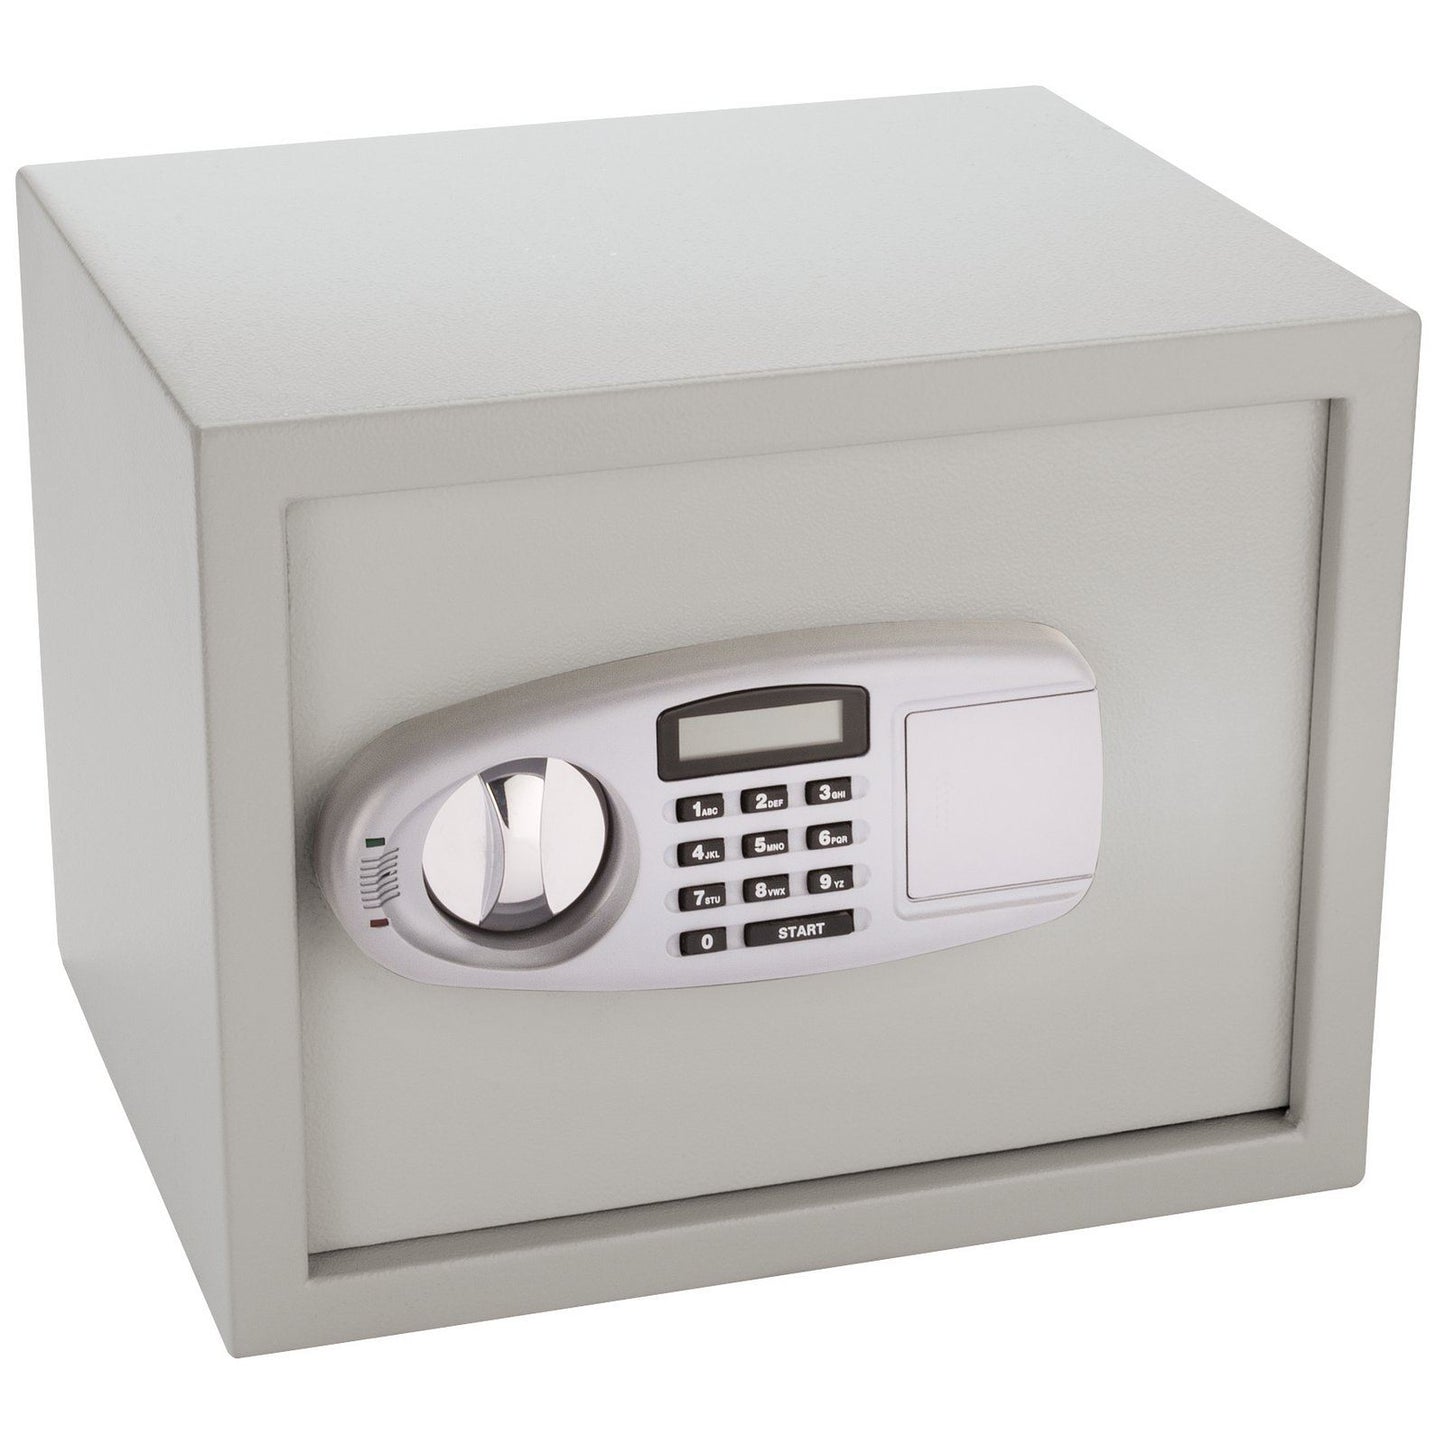 Draper 38216 SAFE13 Electronic Safe (26L) Home Security